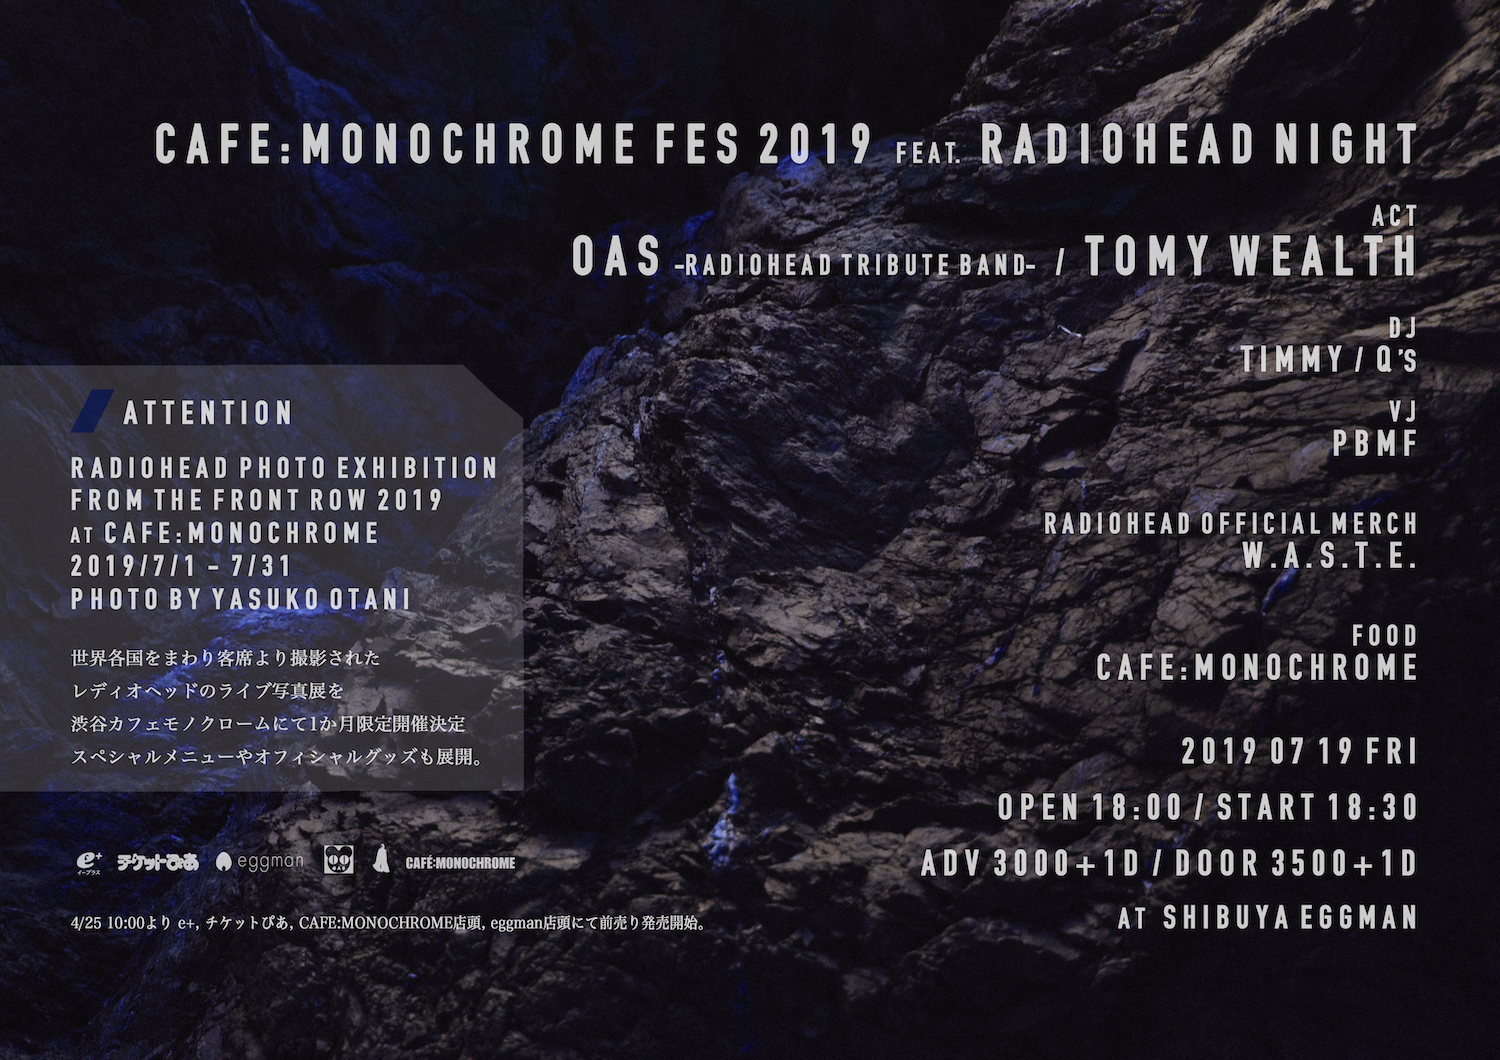 Thom Yorke来日記念 CAFÉ:MONOCHROME FES 2019 feat. RADIOHEAD NIGHT